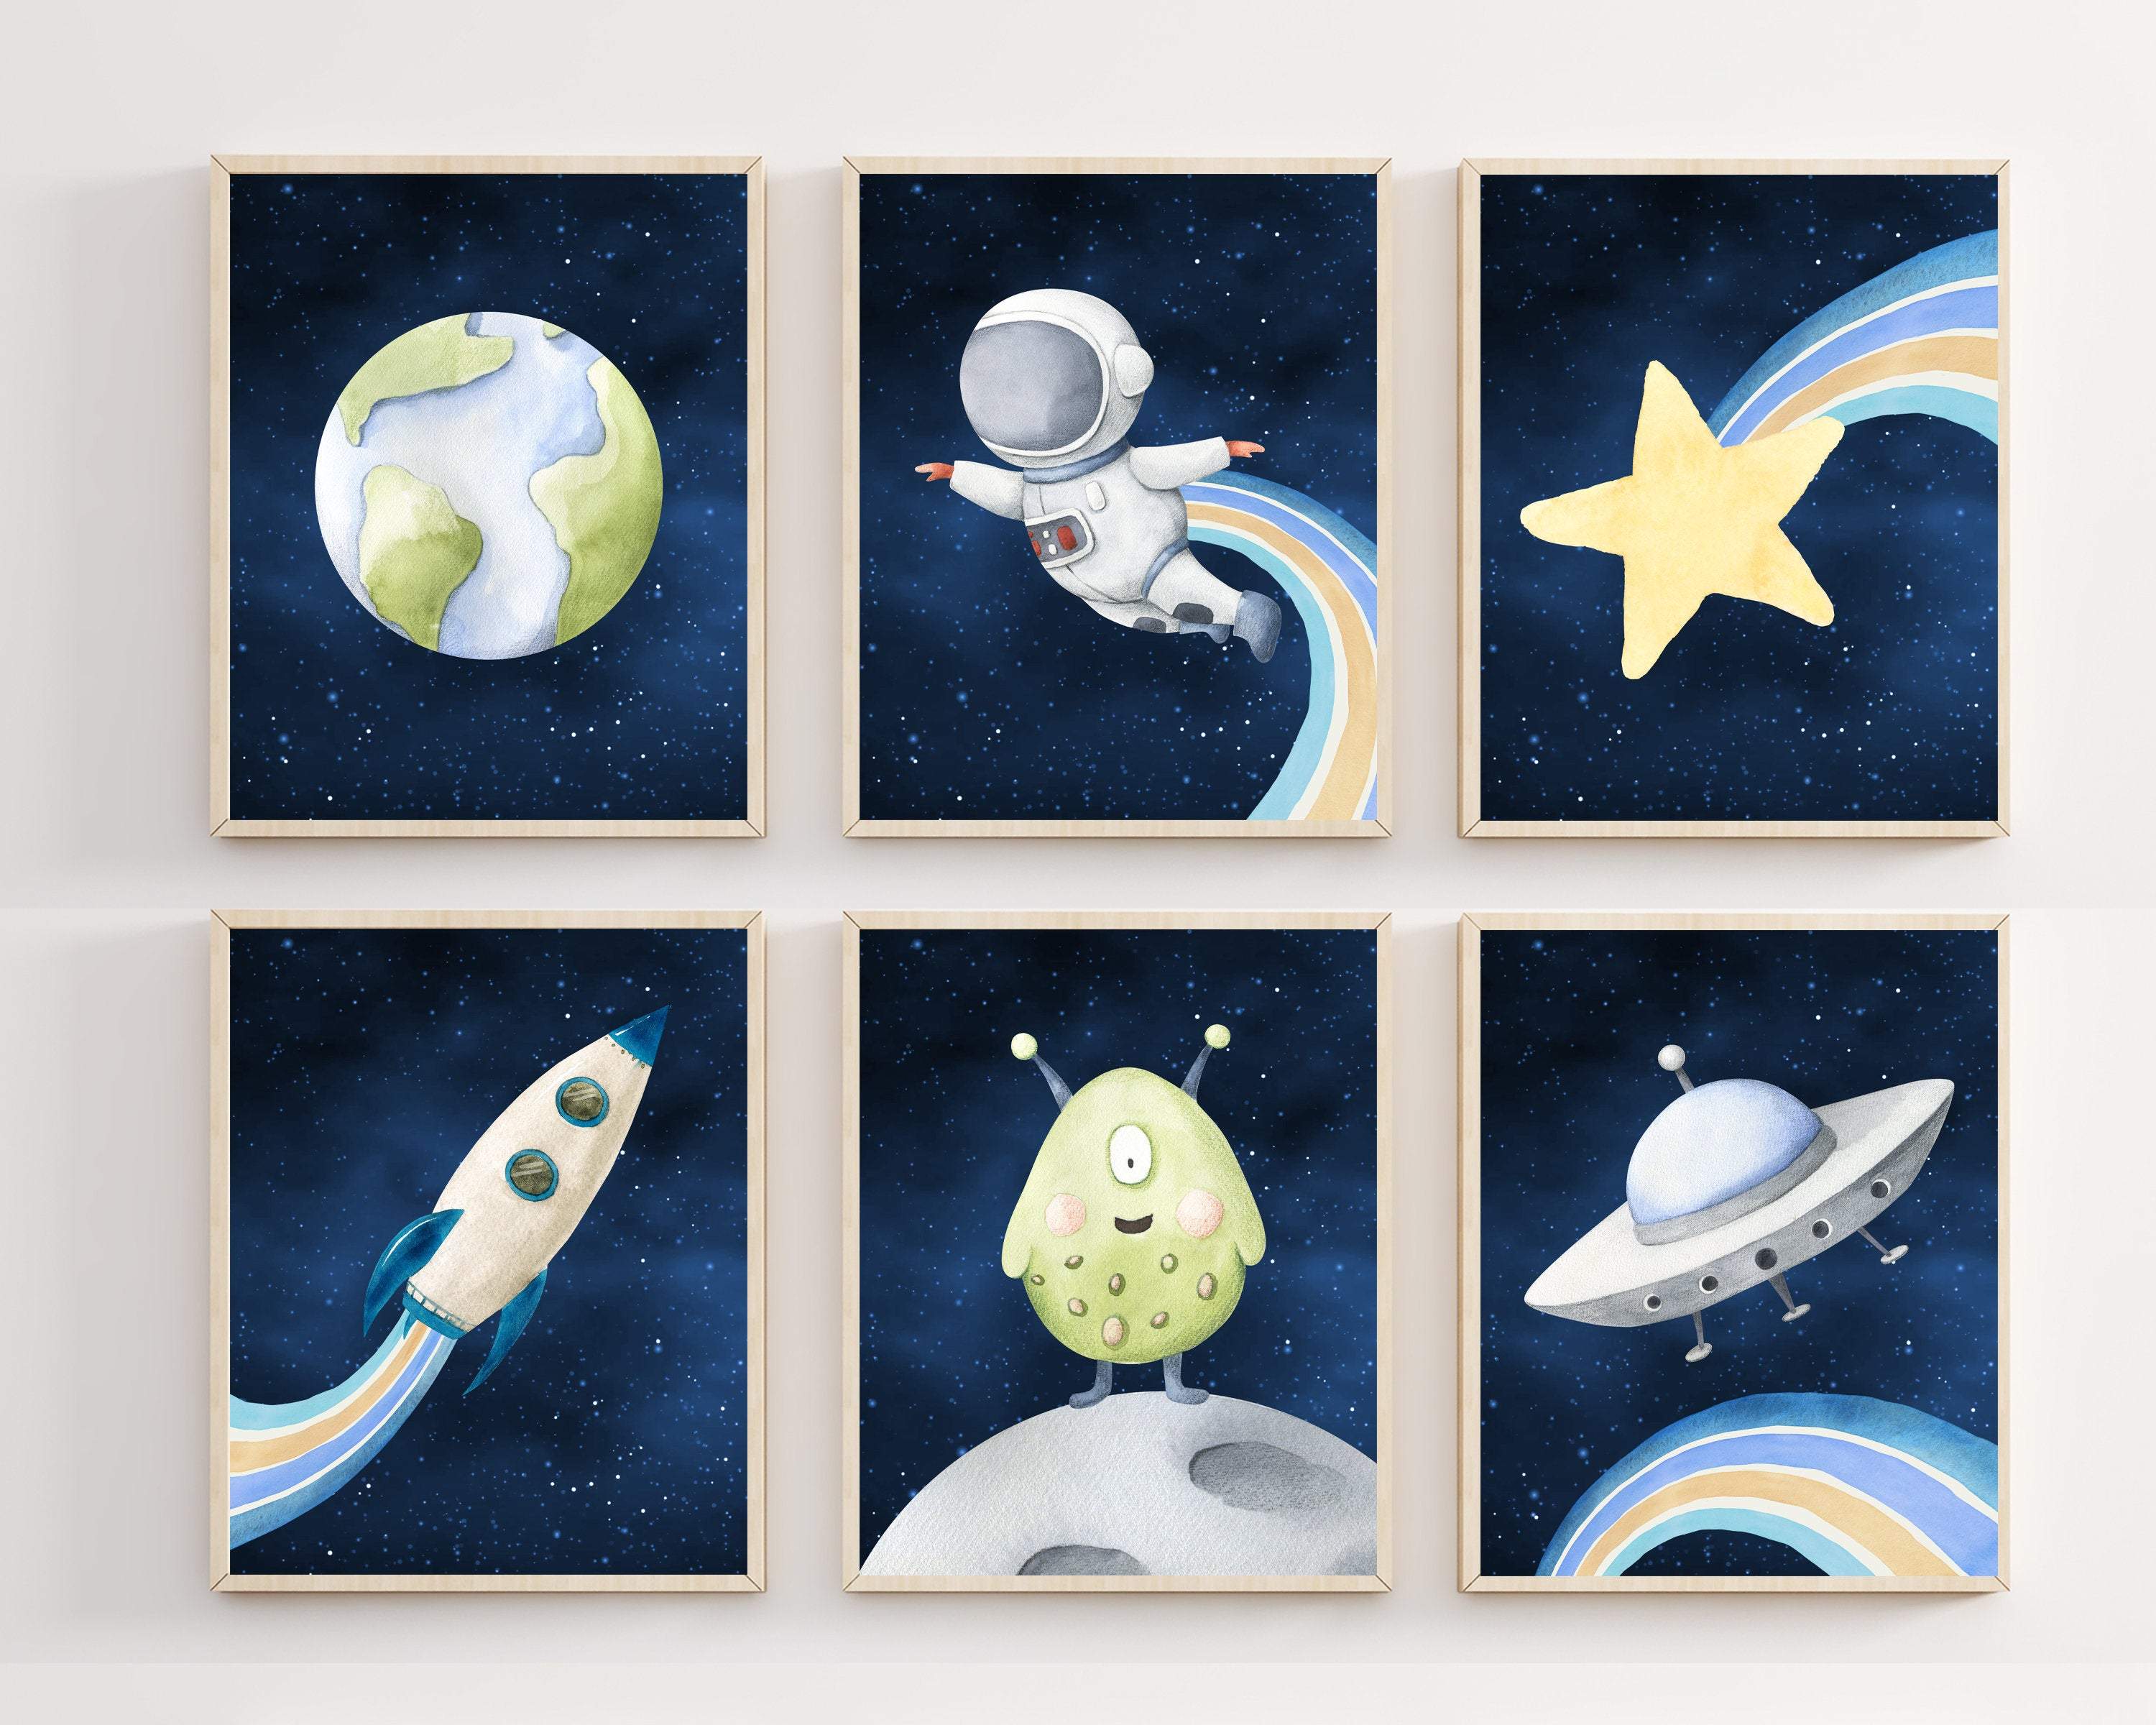 Space nursery decor - Space art print - Space printable art - Boys room wall art - Space poster - Space decor - Astronaut Rocket Alien Earth nursery art print baby nursery bedroom decor